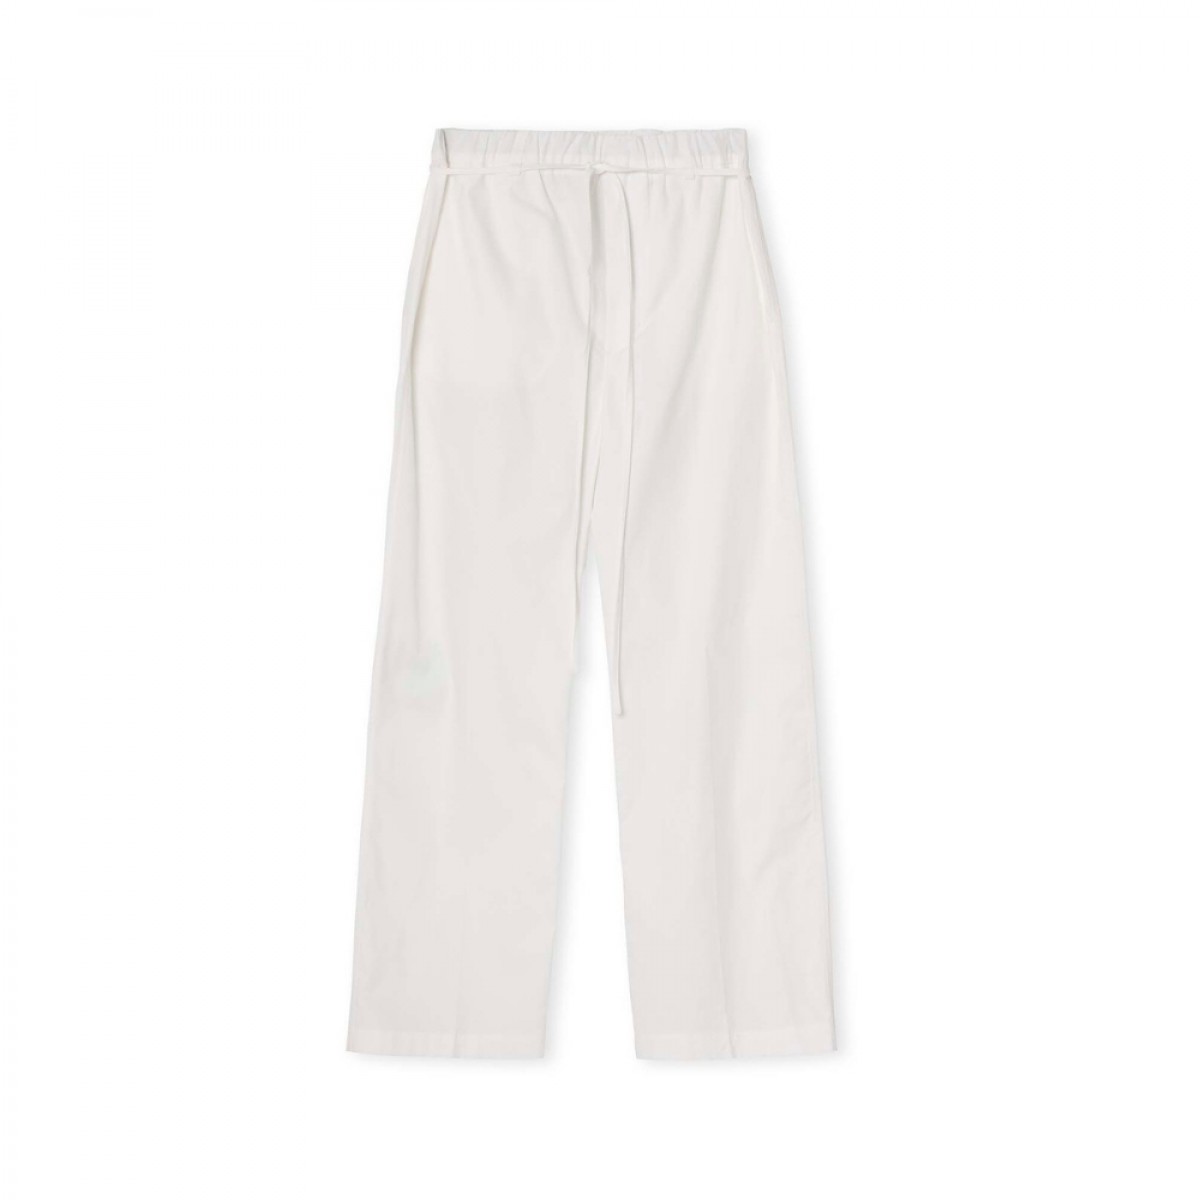 billi pants - white 